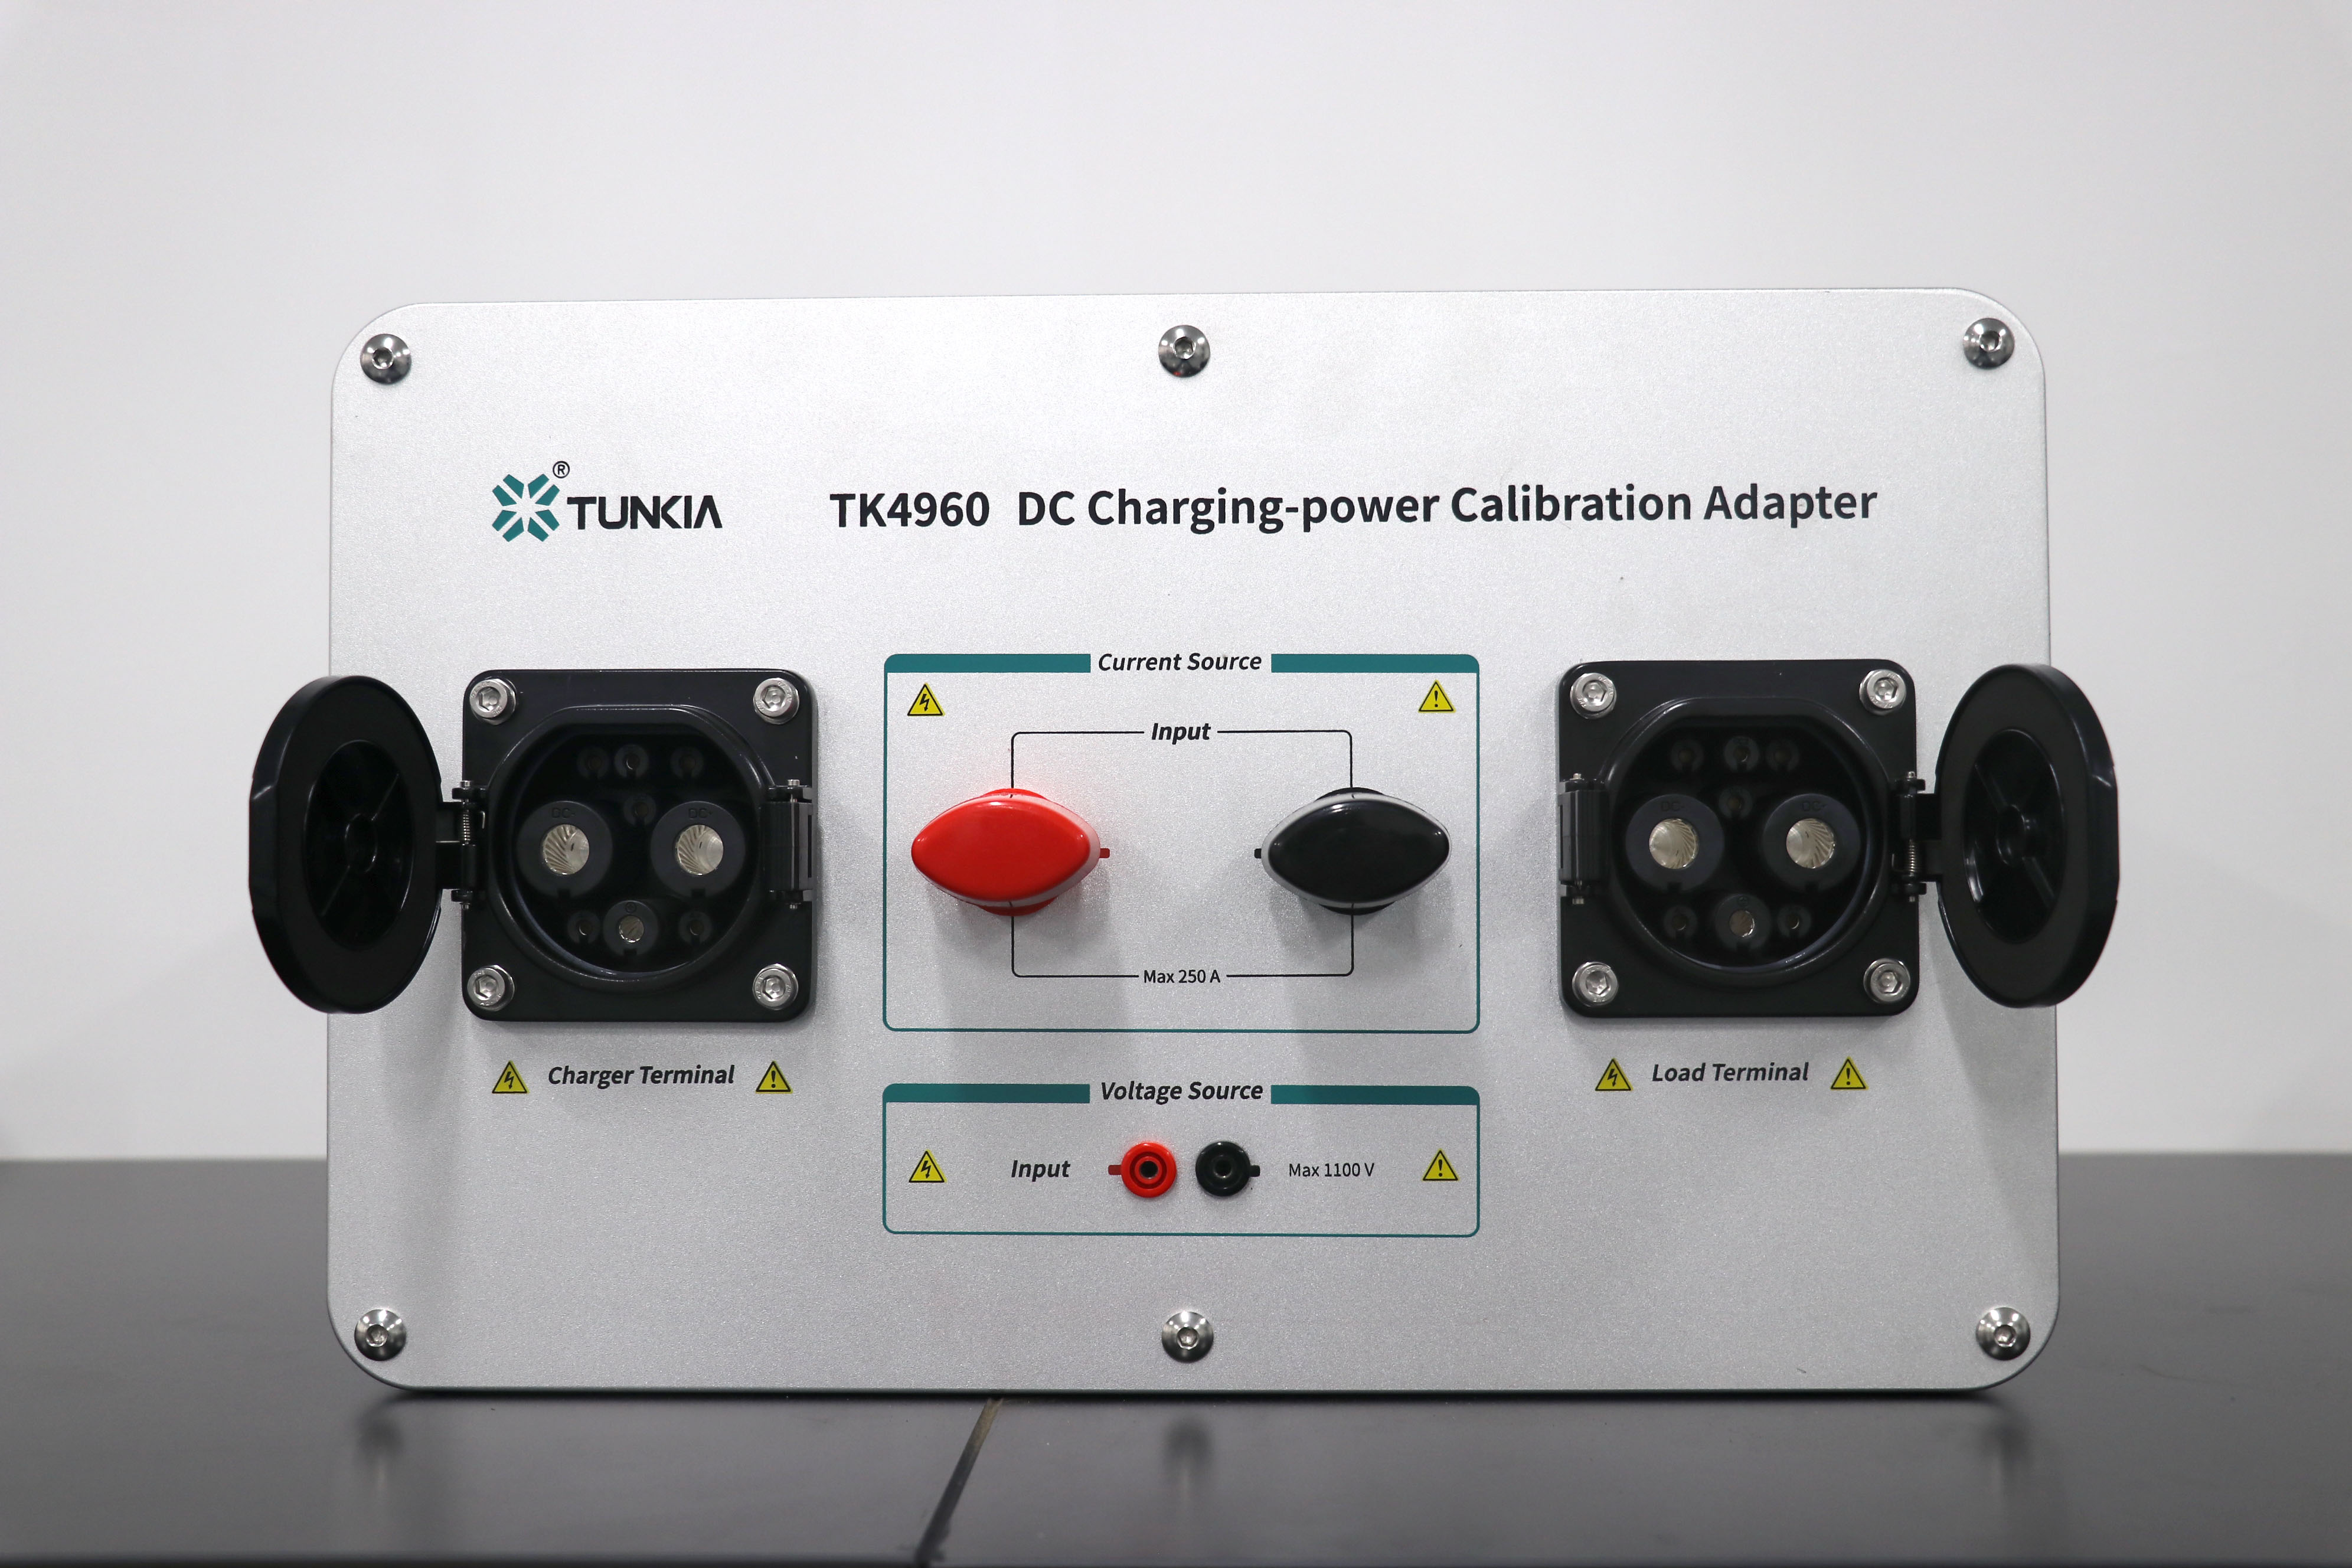 TK4960 DC Charging-Power Calibration Adapter